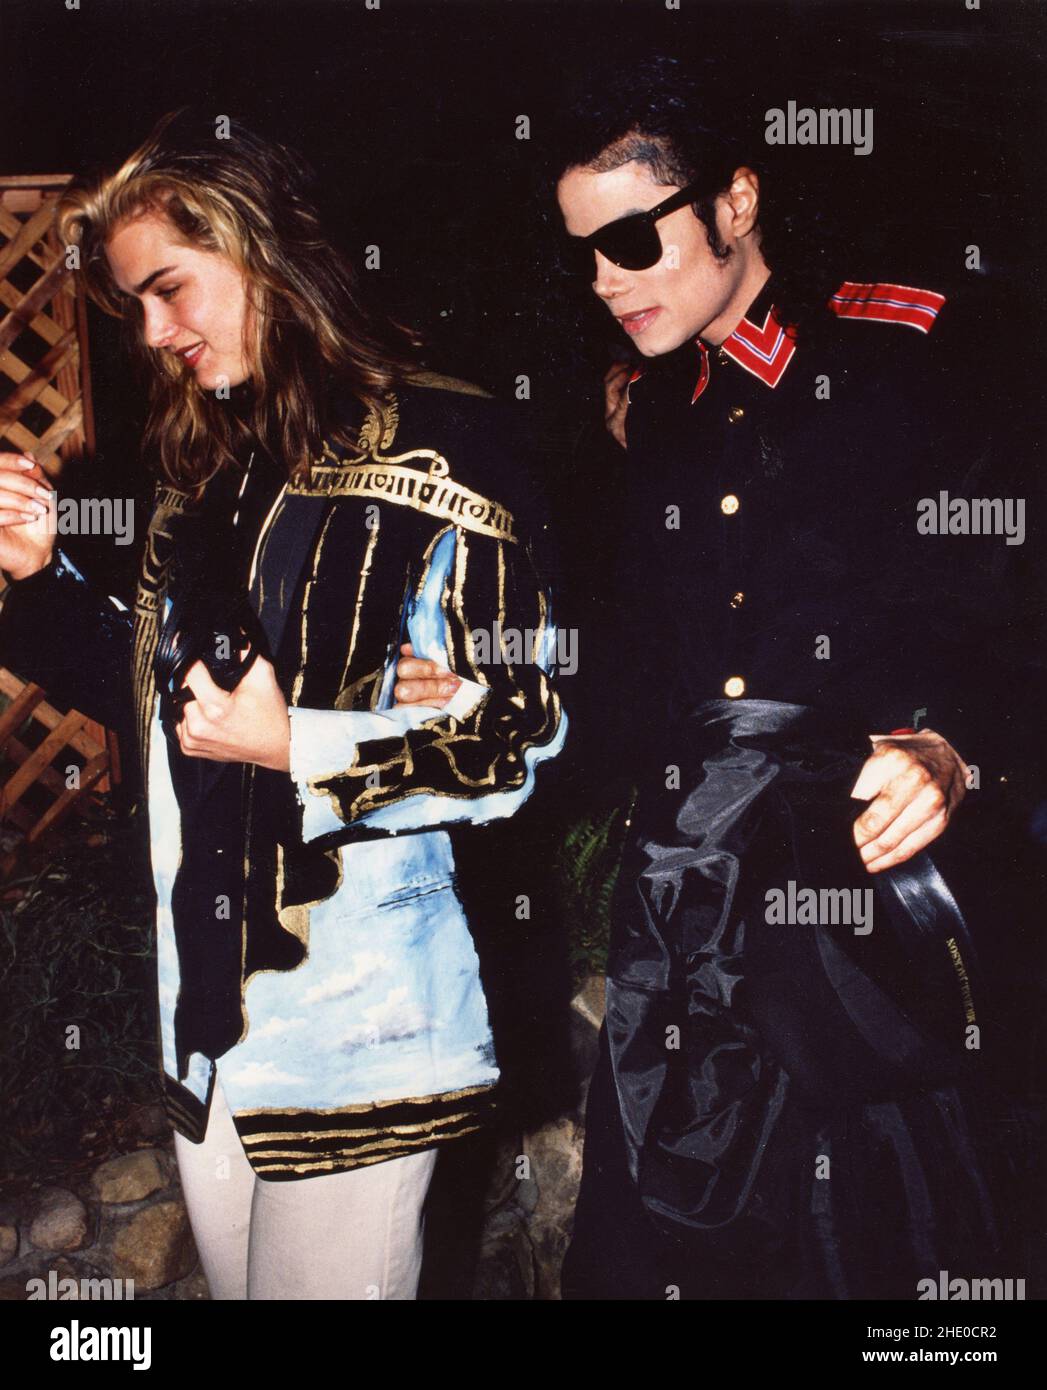 Los Angeles.CA.USA. LIBRARY. Michael Jackson and Brooke Shields going to a  restaurant. 19th November 1991. UPDATED:03.01.2022  Ref:LMK30-SLIB030122PBOR-001 Peter Borsari/PIP-Landmark Media  WWW.LMKMEDIA.COM Stock Photo - Alamy